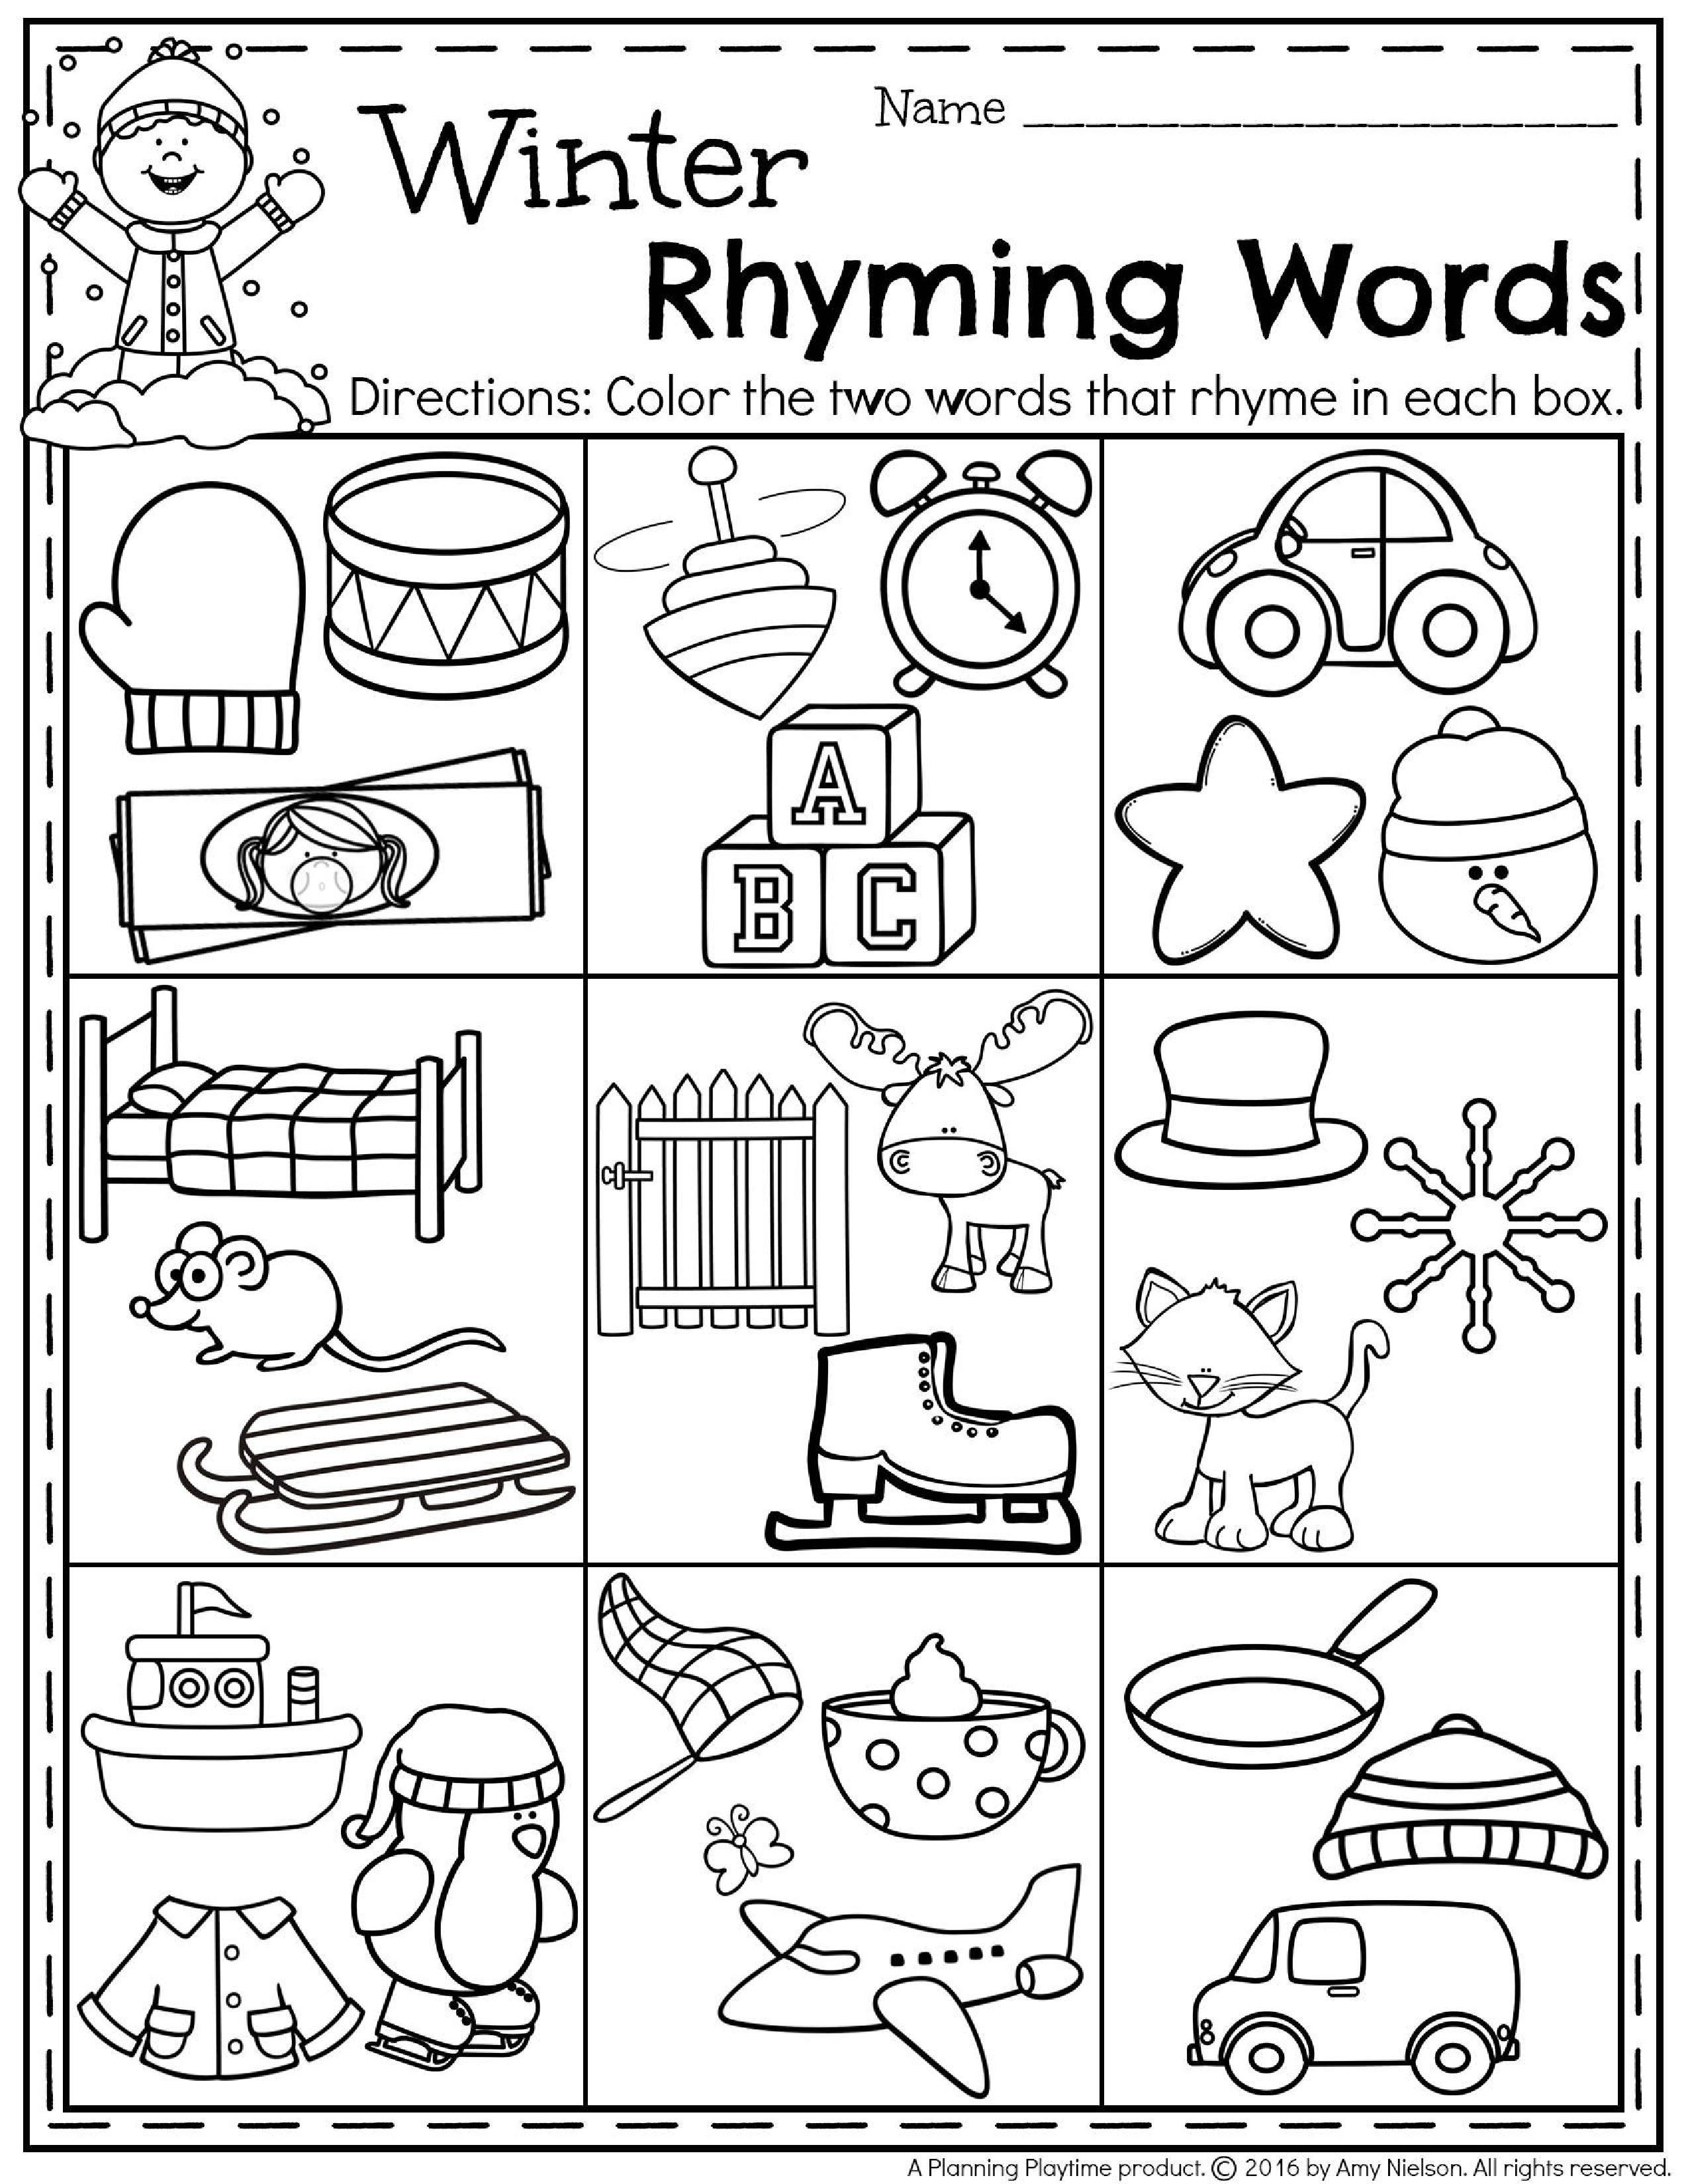 Preschool Worksheet Templates at allbusinesstemplates com